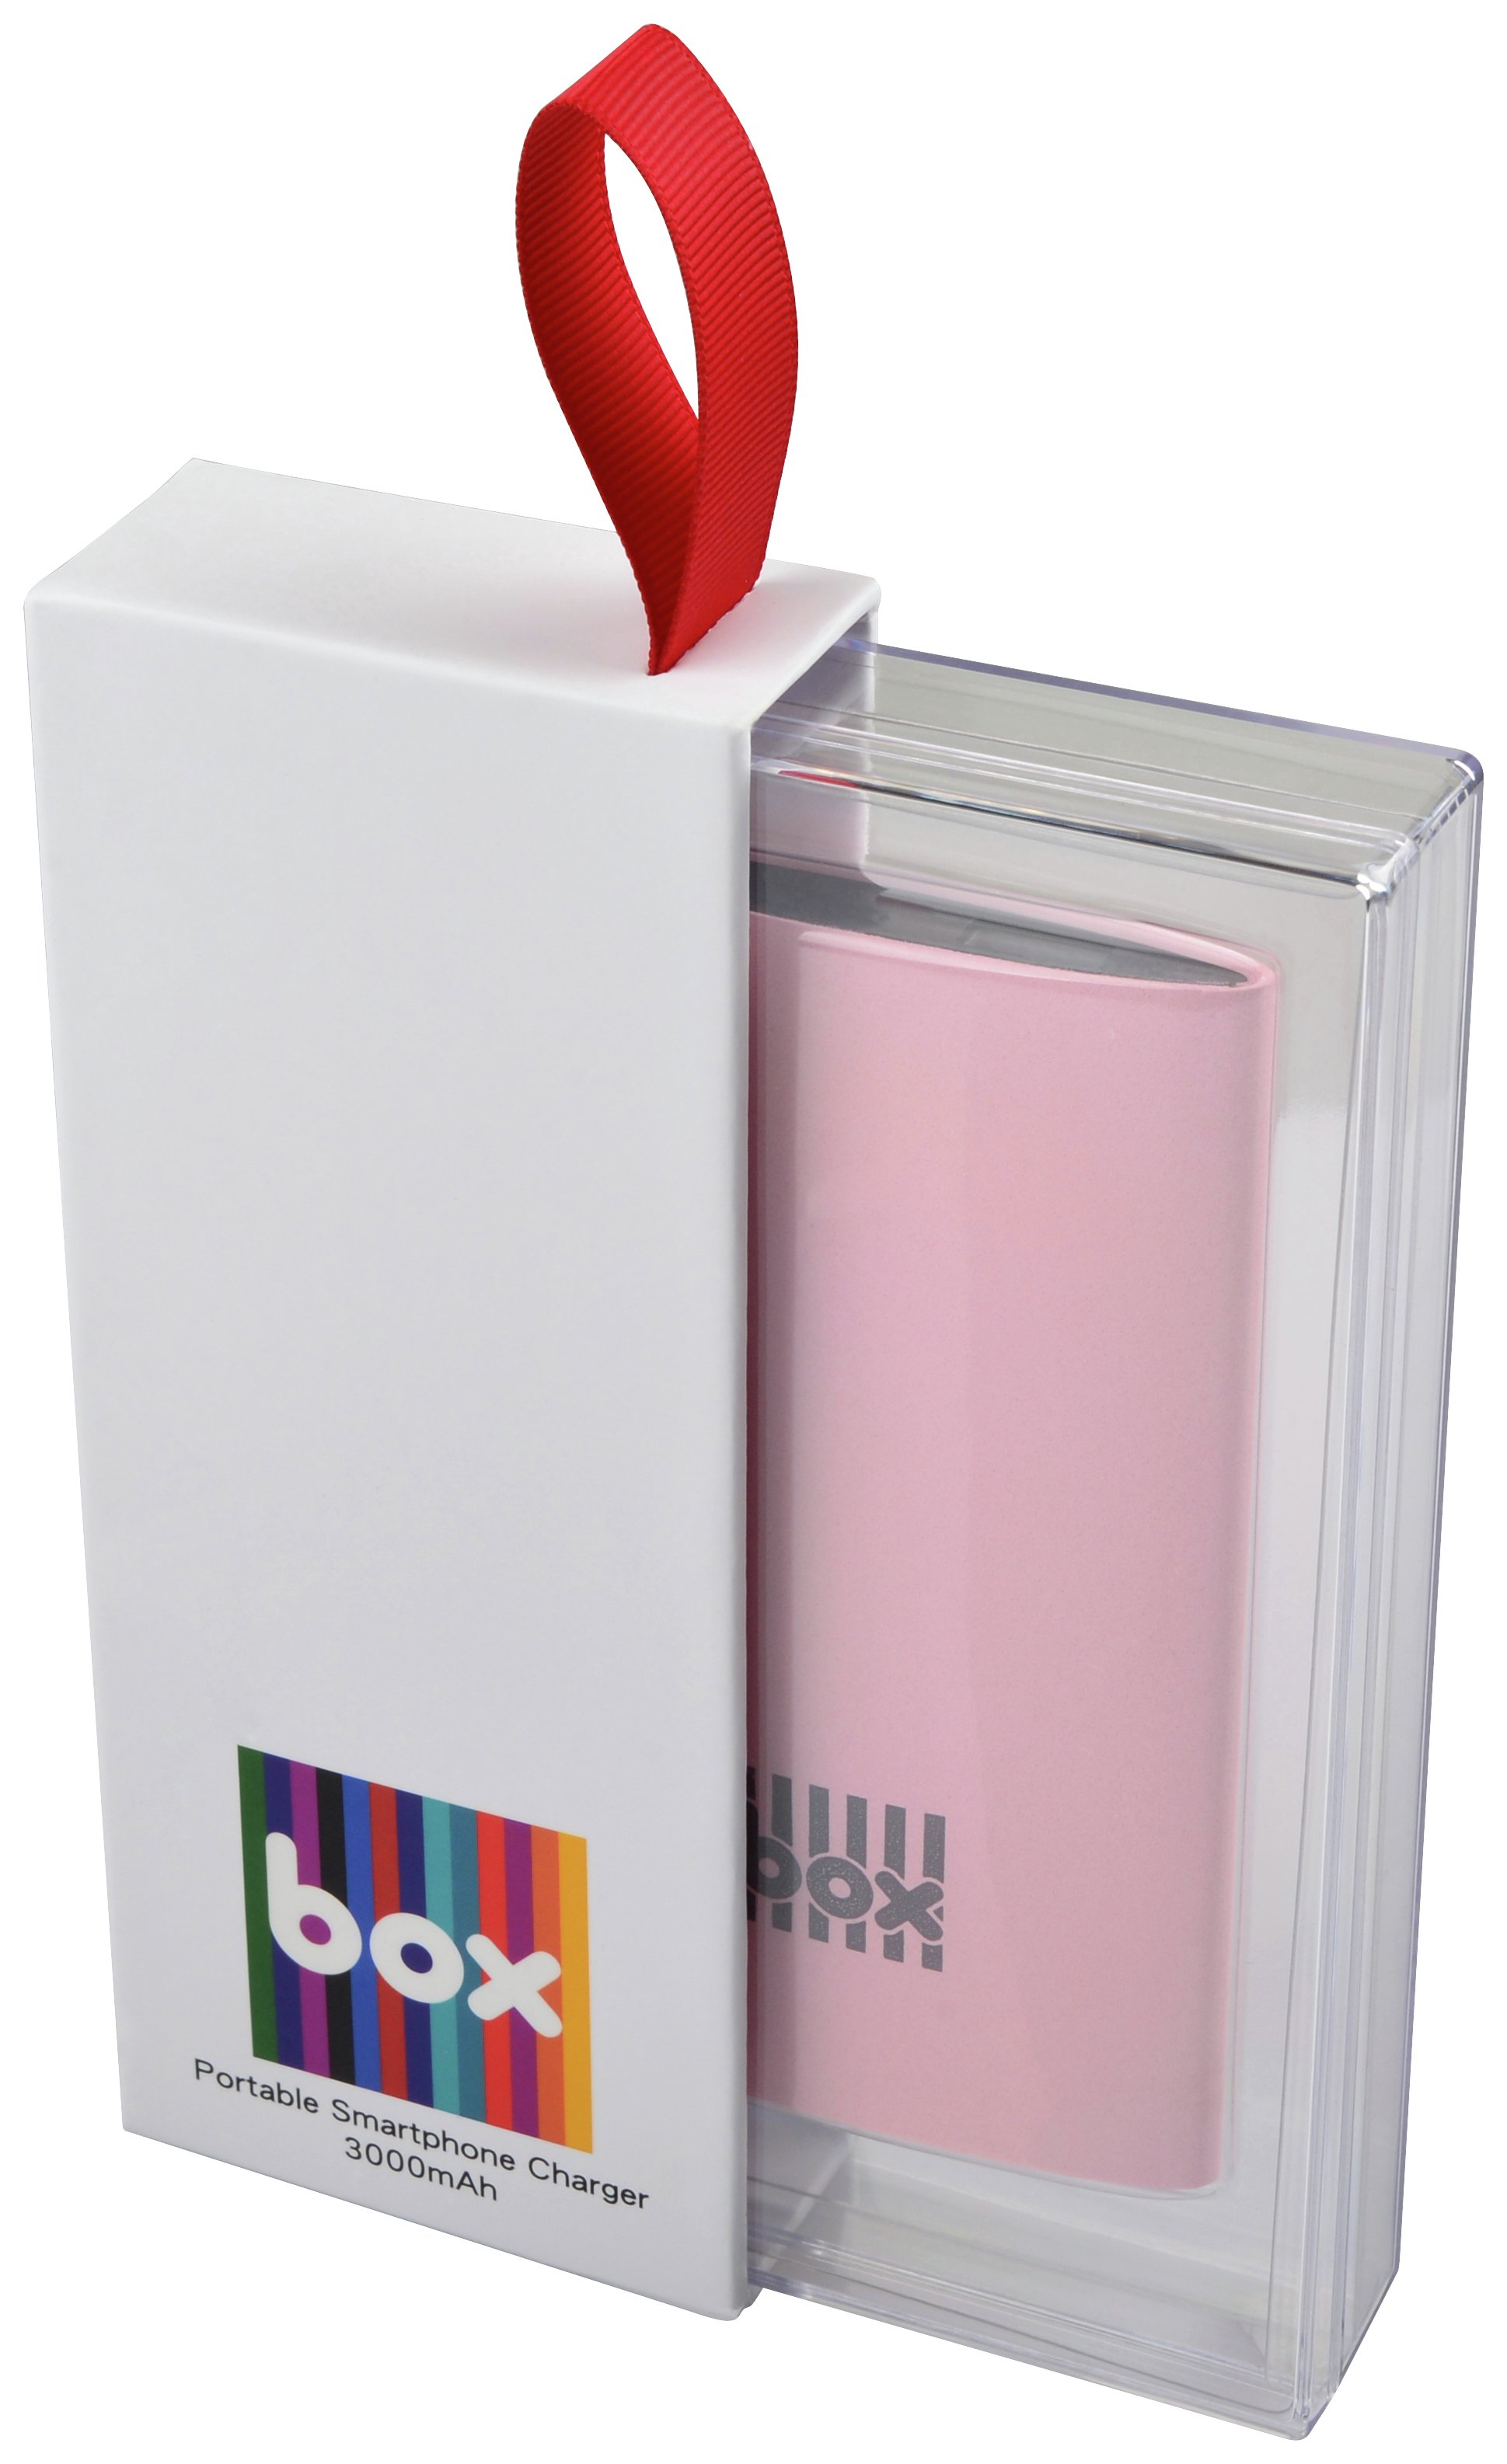 BOX 3000mAh Portable Smartphone Charger - Pink.